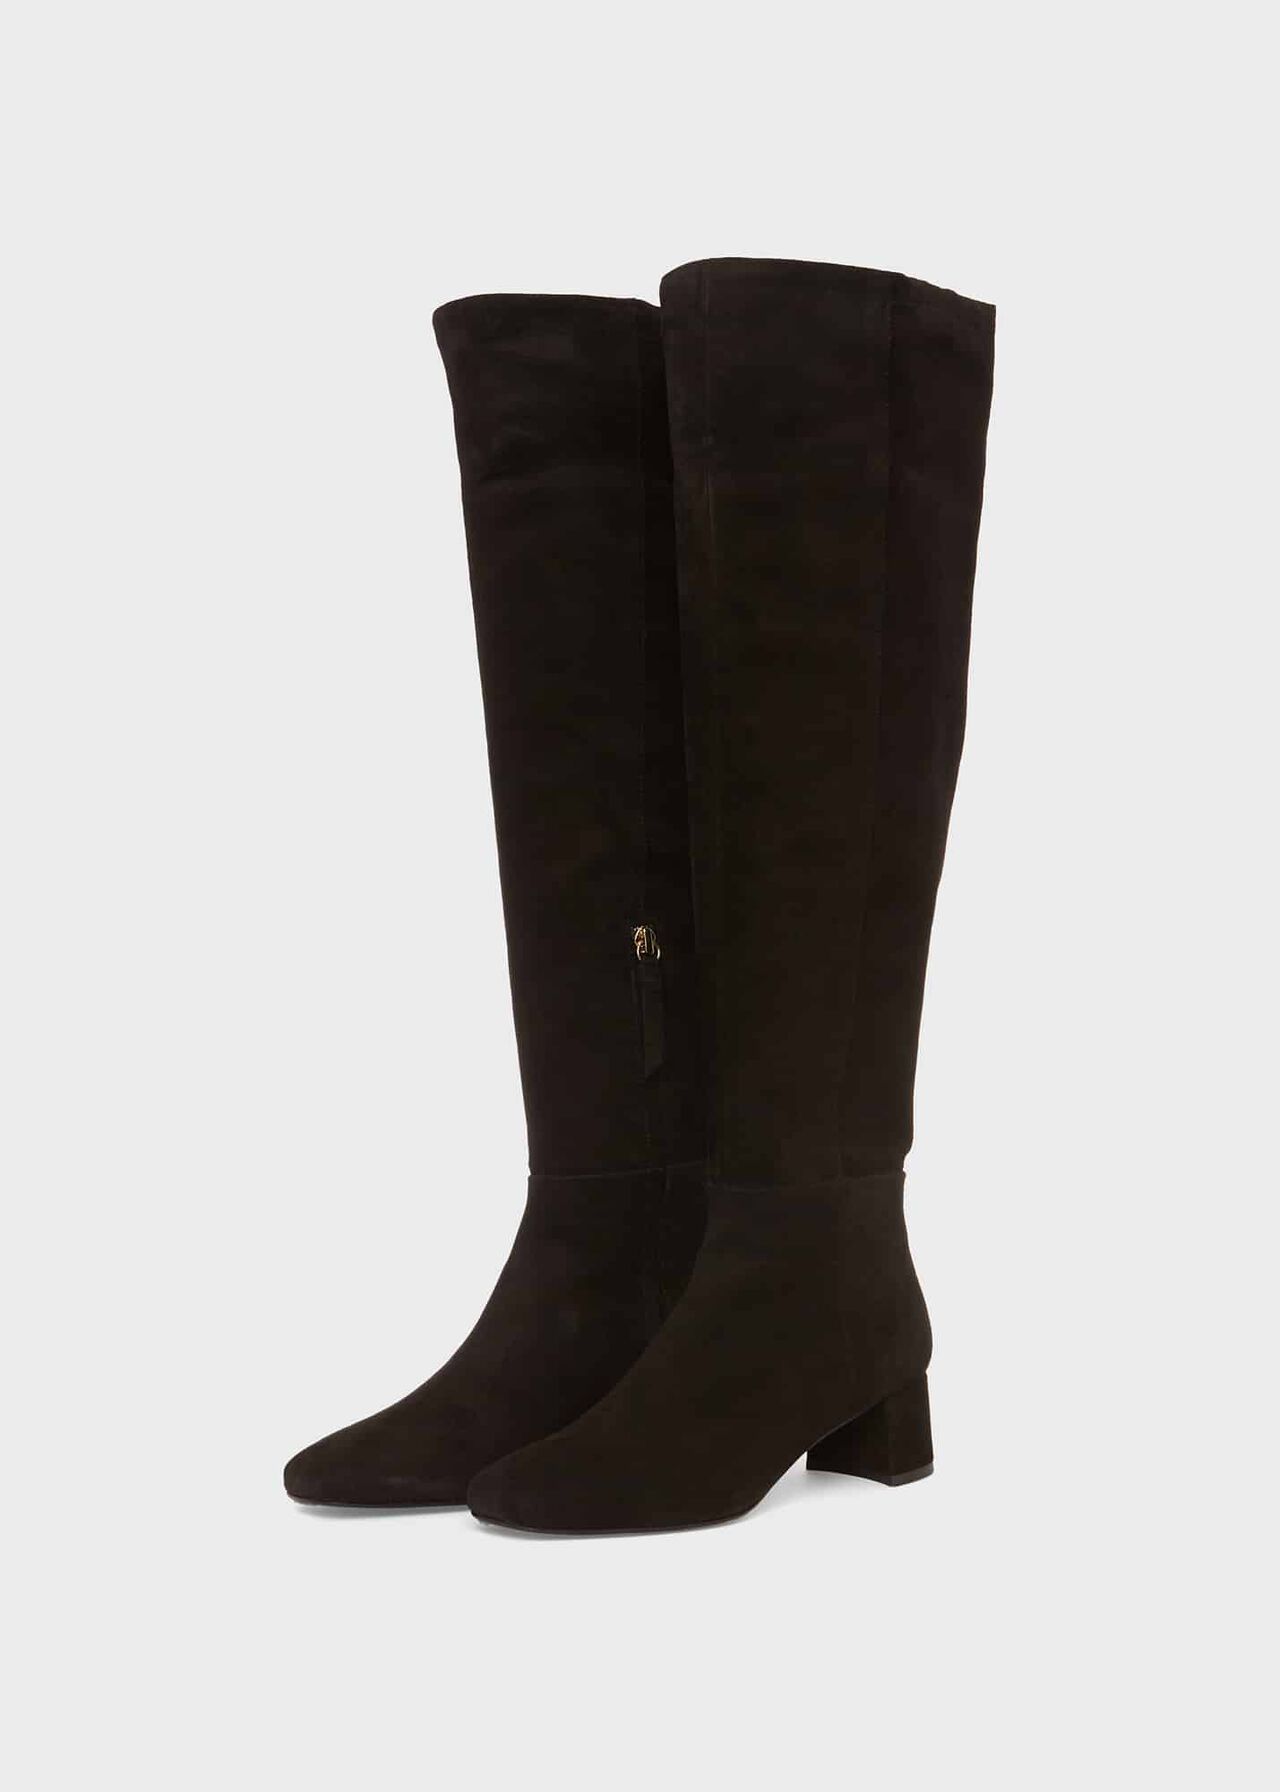 Khloe Leather Over Knee Boots, Black, hi-res